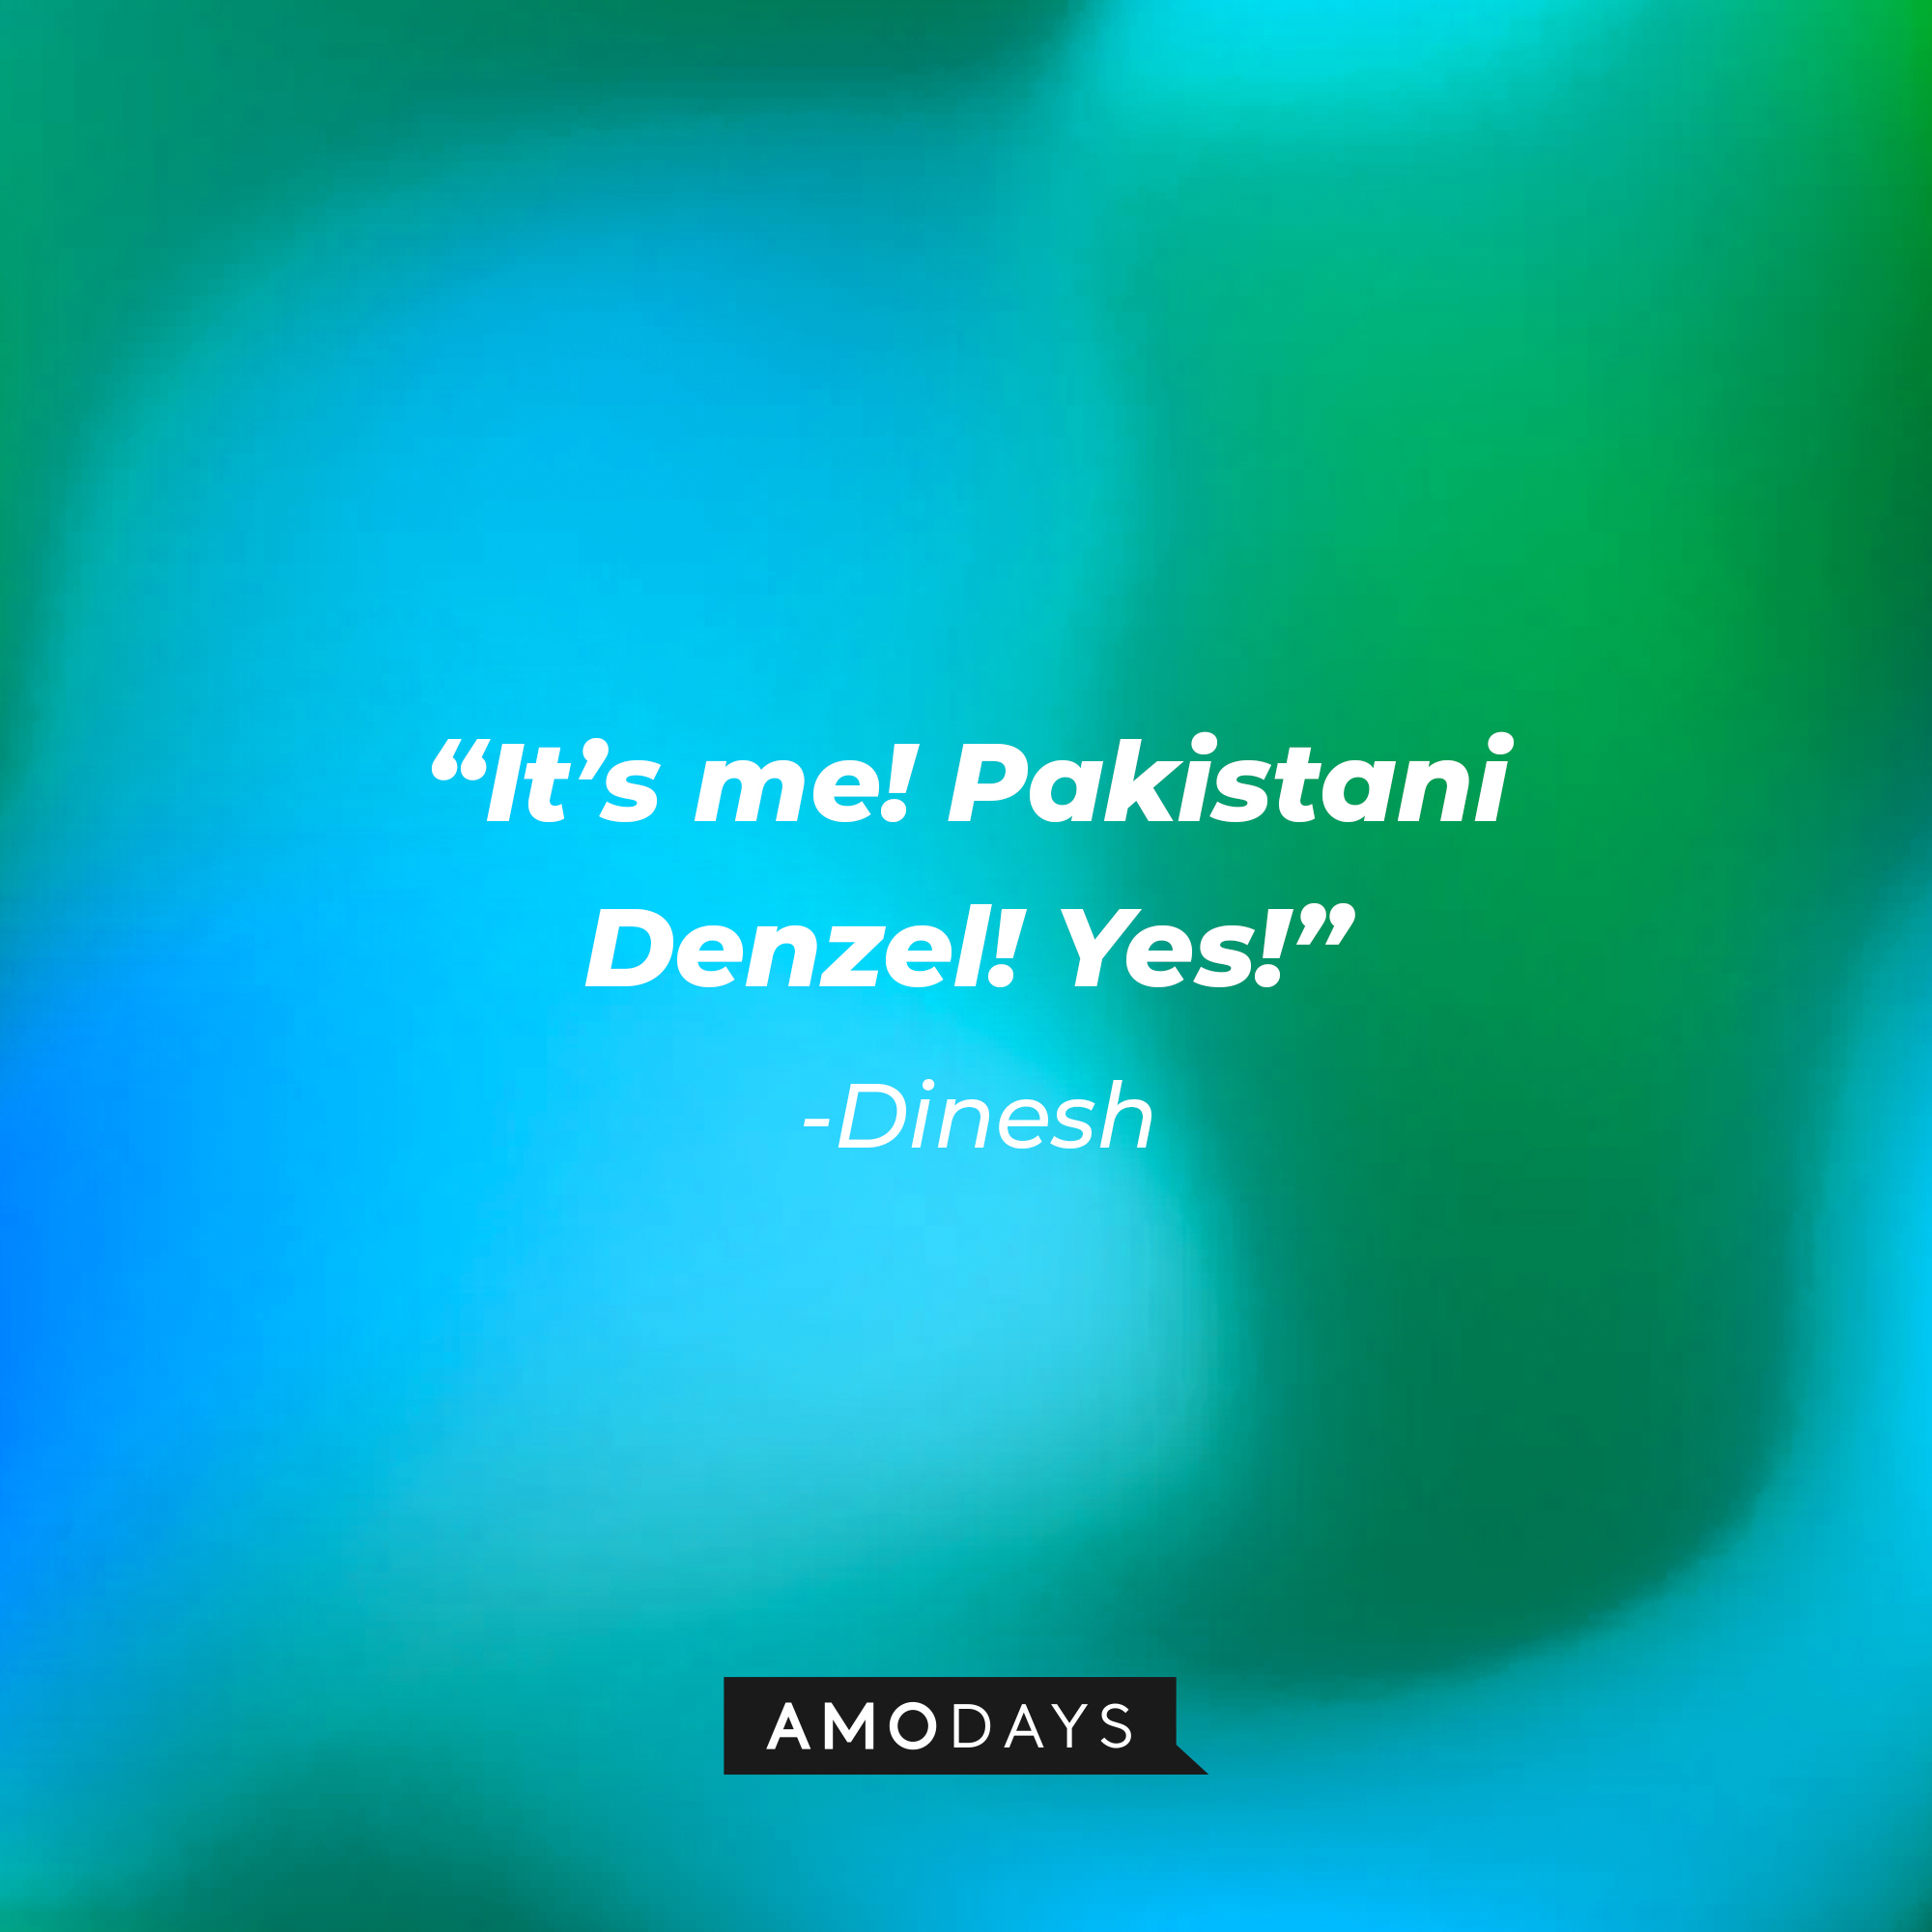 Dinesh's quote: “It’s me! Pakistani Denzel! Yes!” | Source: Amodays